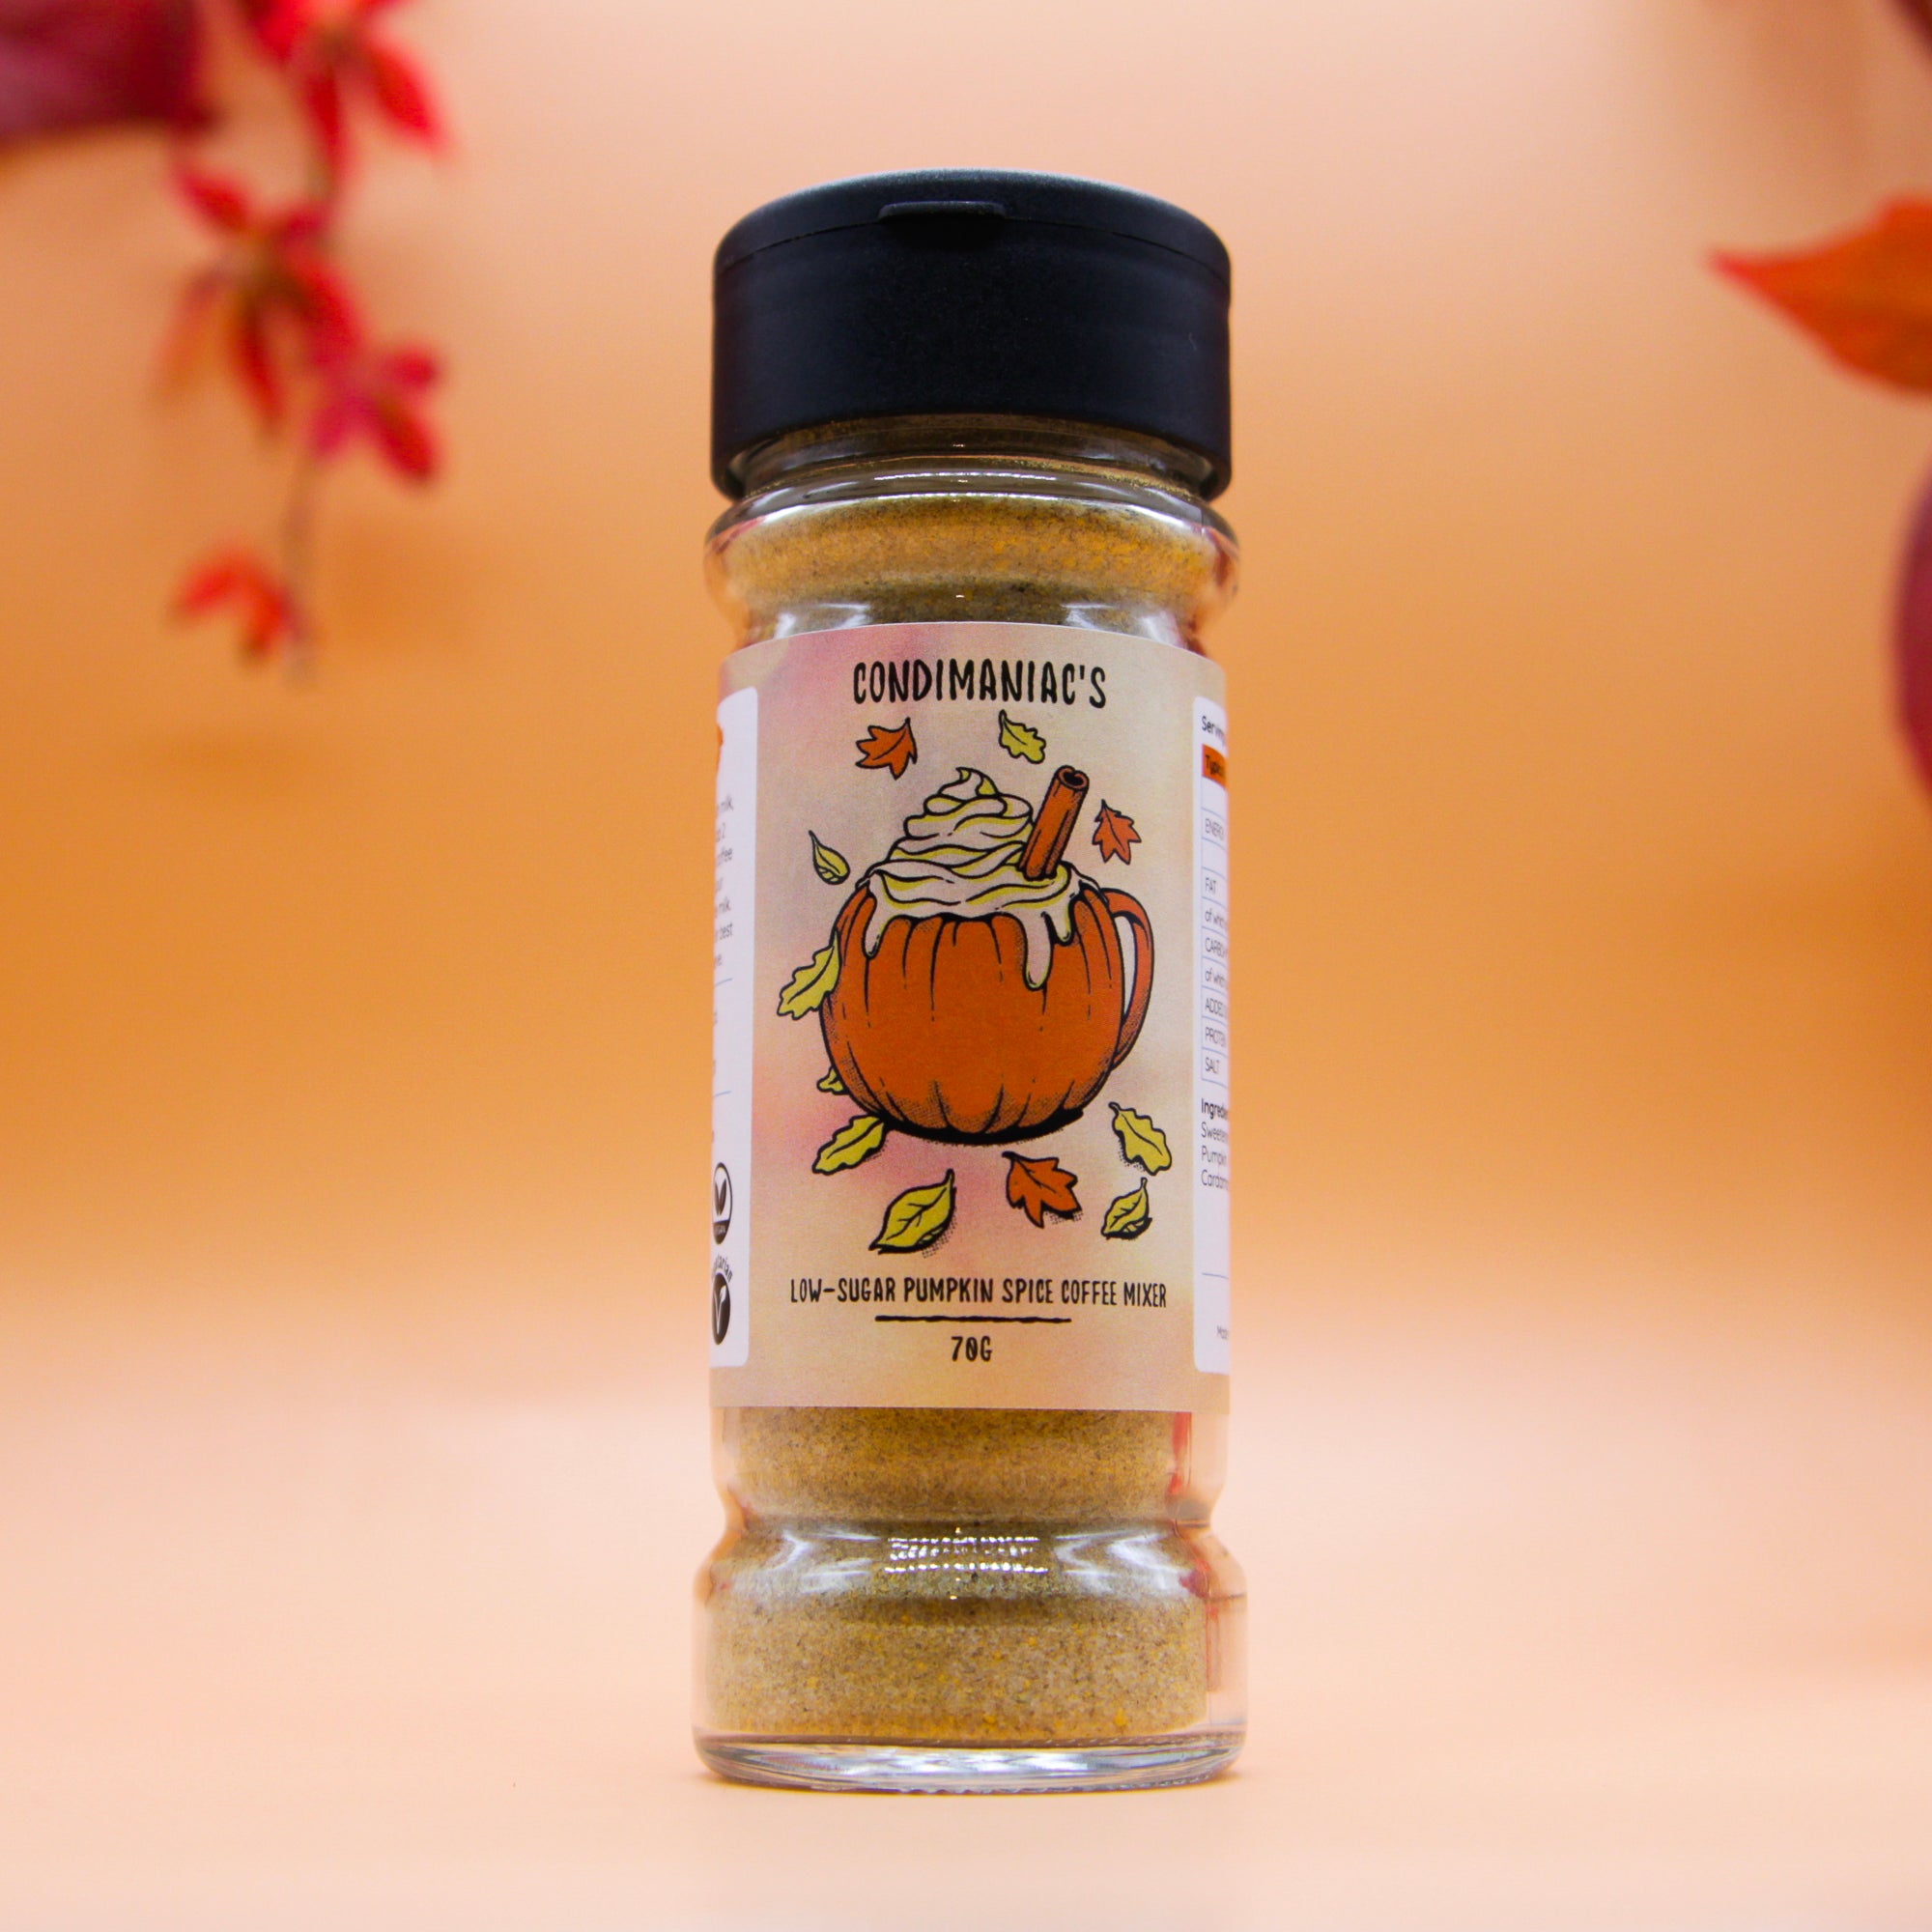 Condimaniac's Low-Sugar Pumpkin Spice Coffee Mixer - (70g) - Seasonal product